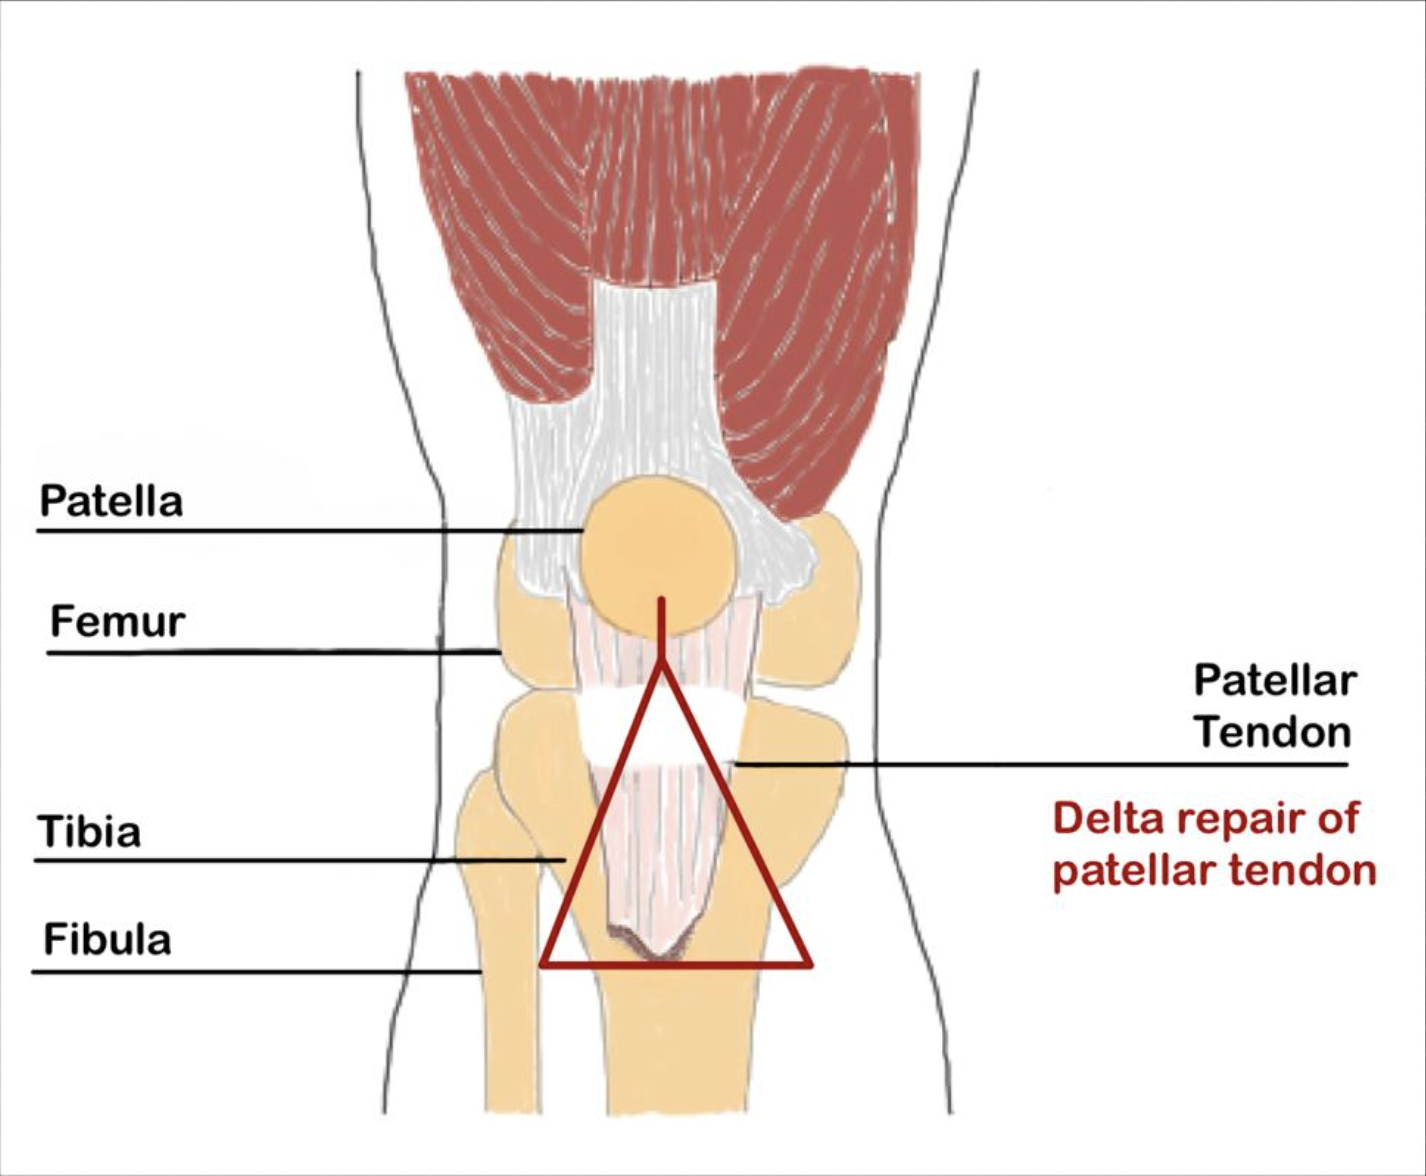 Delta technique reconstruction of a failed patellar tendon repair: a case  report